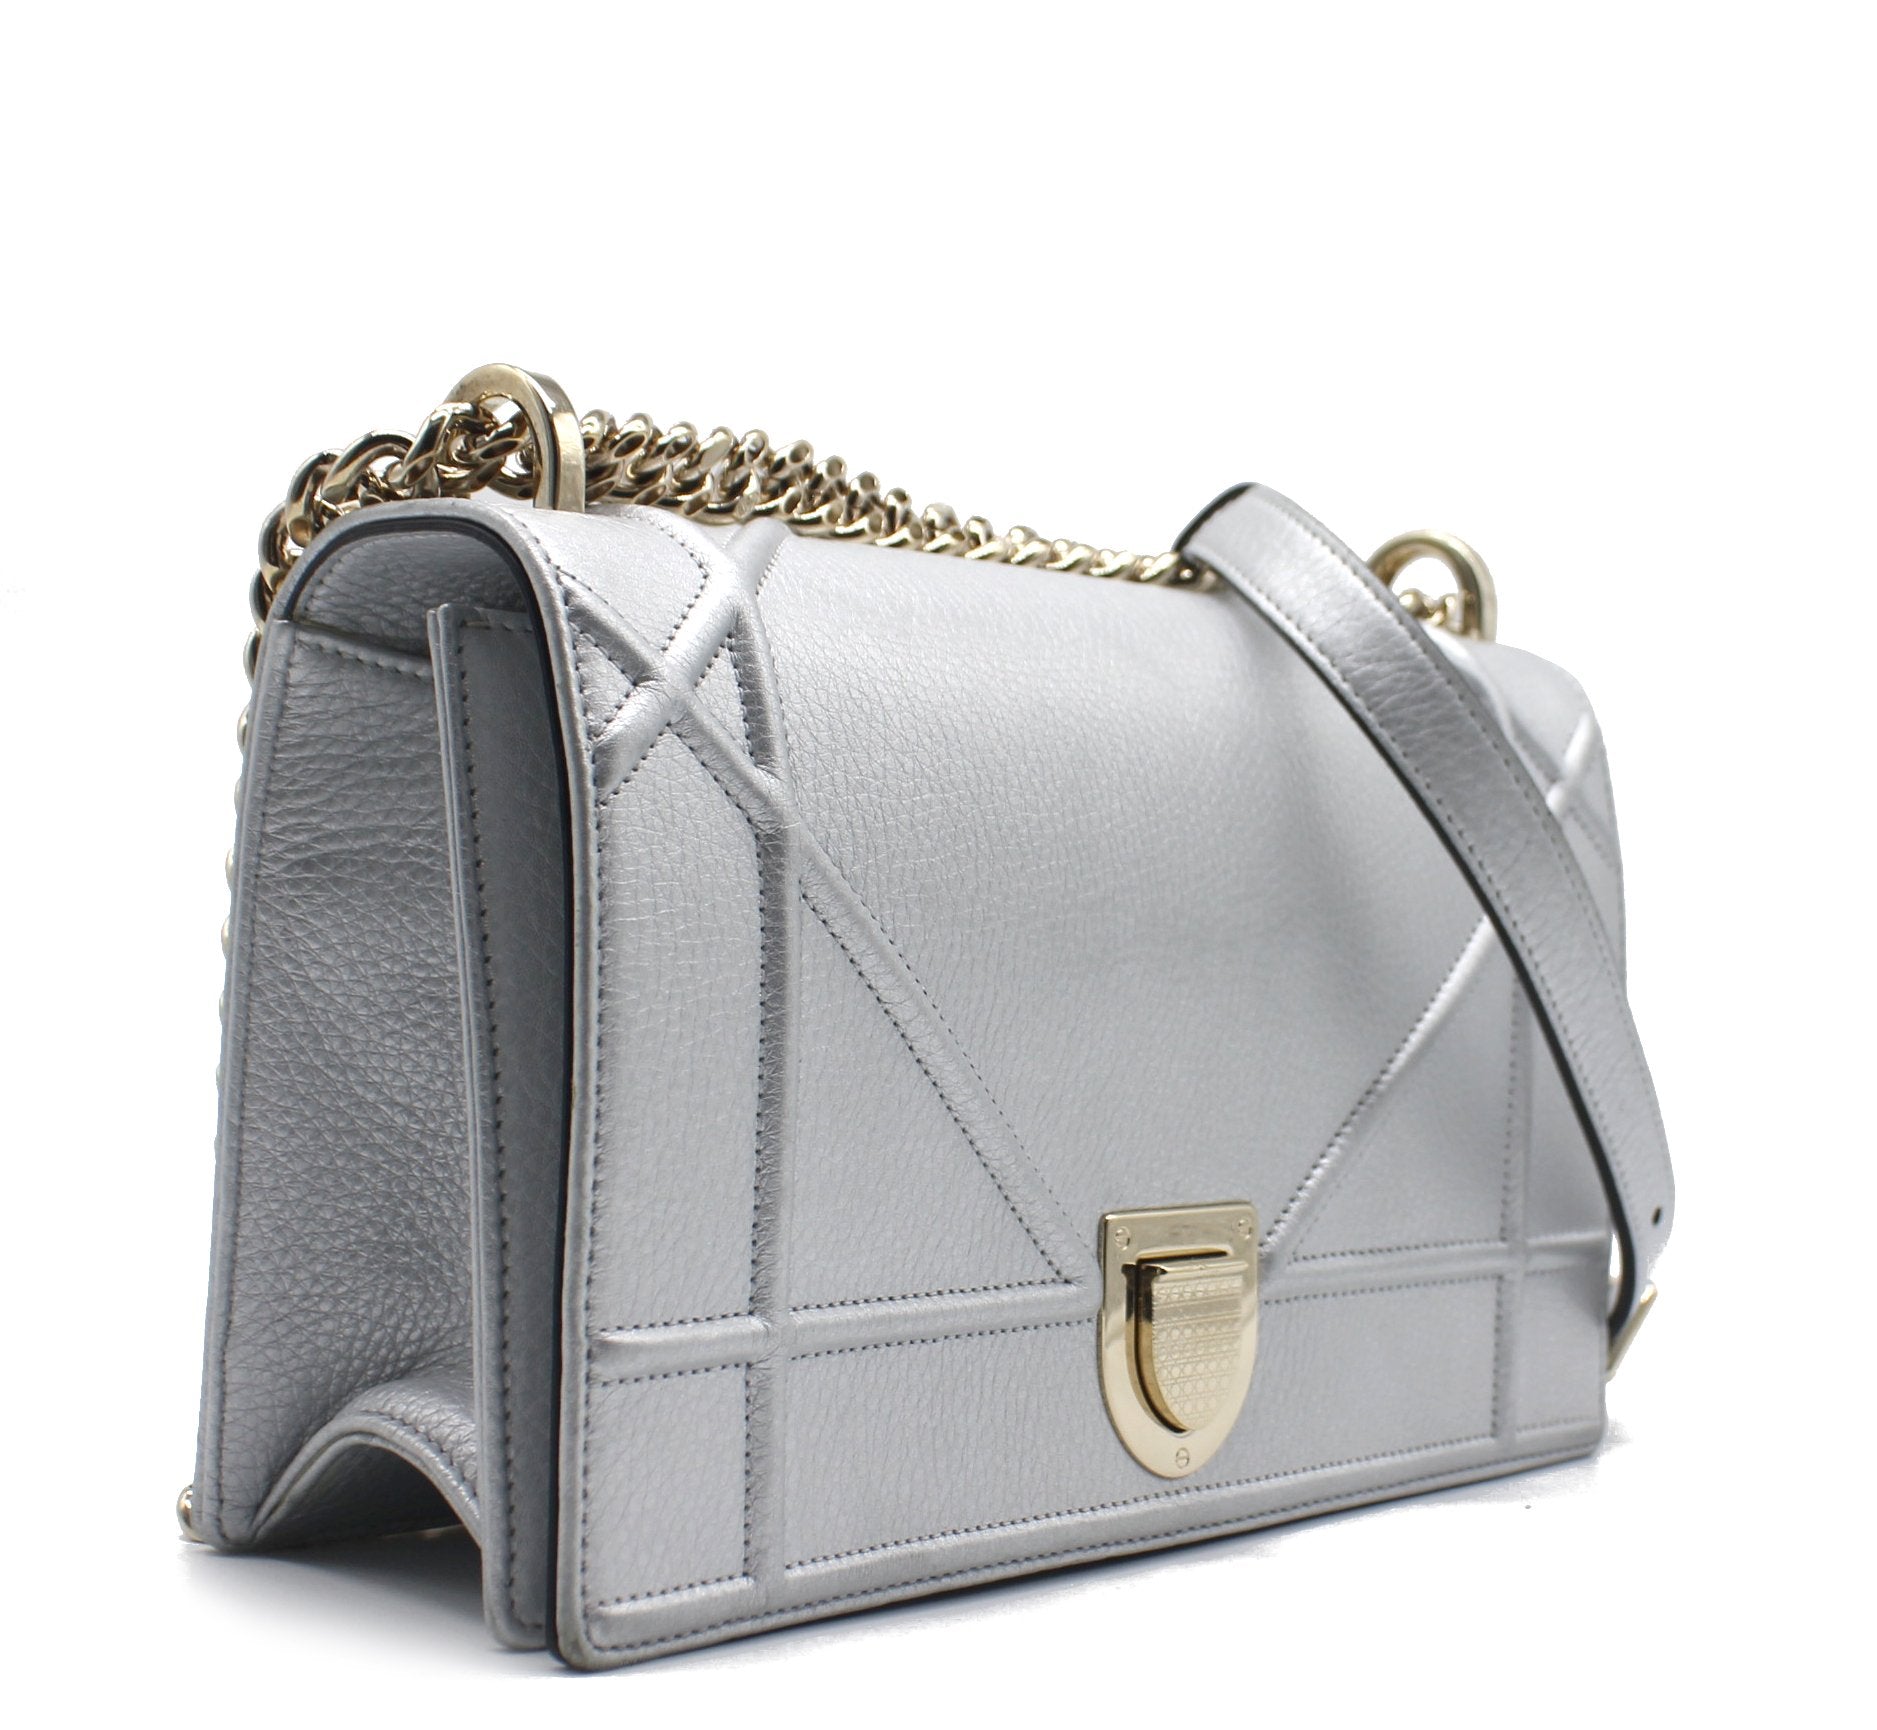 Christian Dior Lambskin Medium Diorama Flap Bag Silver